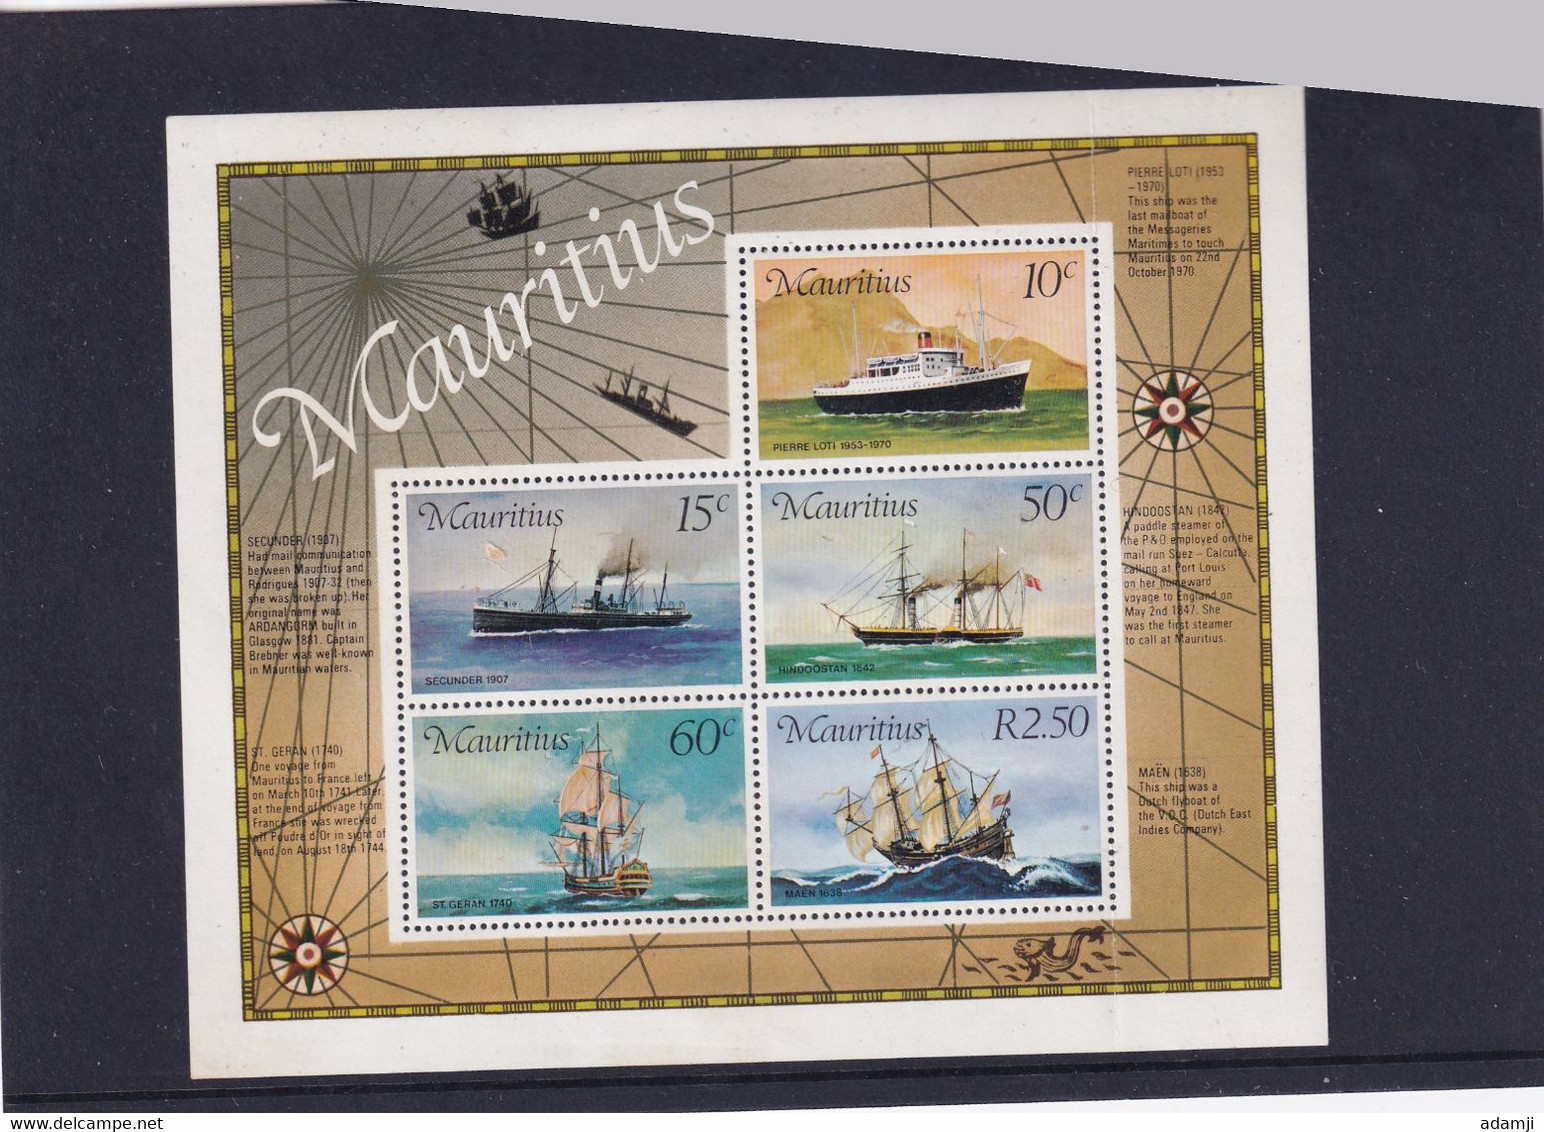 MAURITIUS 197 SHIP MS MNH. - Mauritius (1968-...)